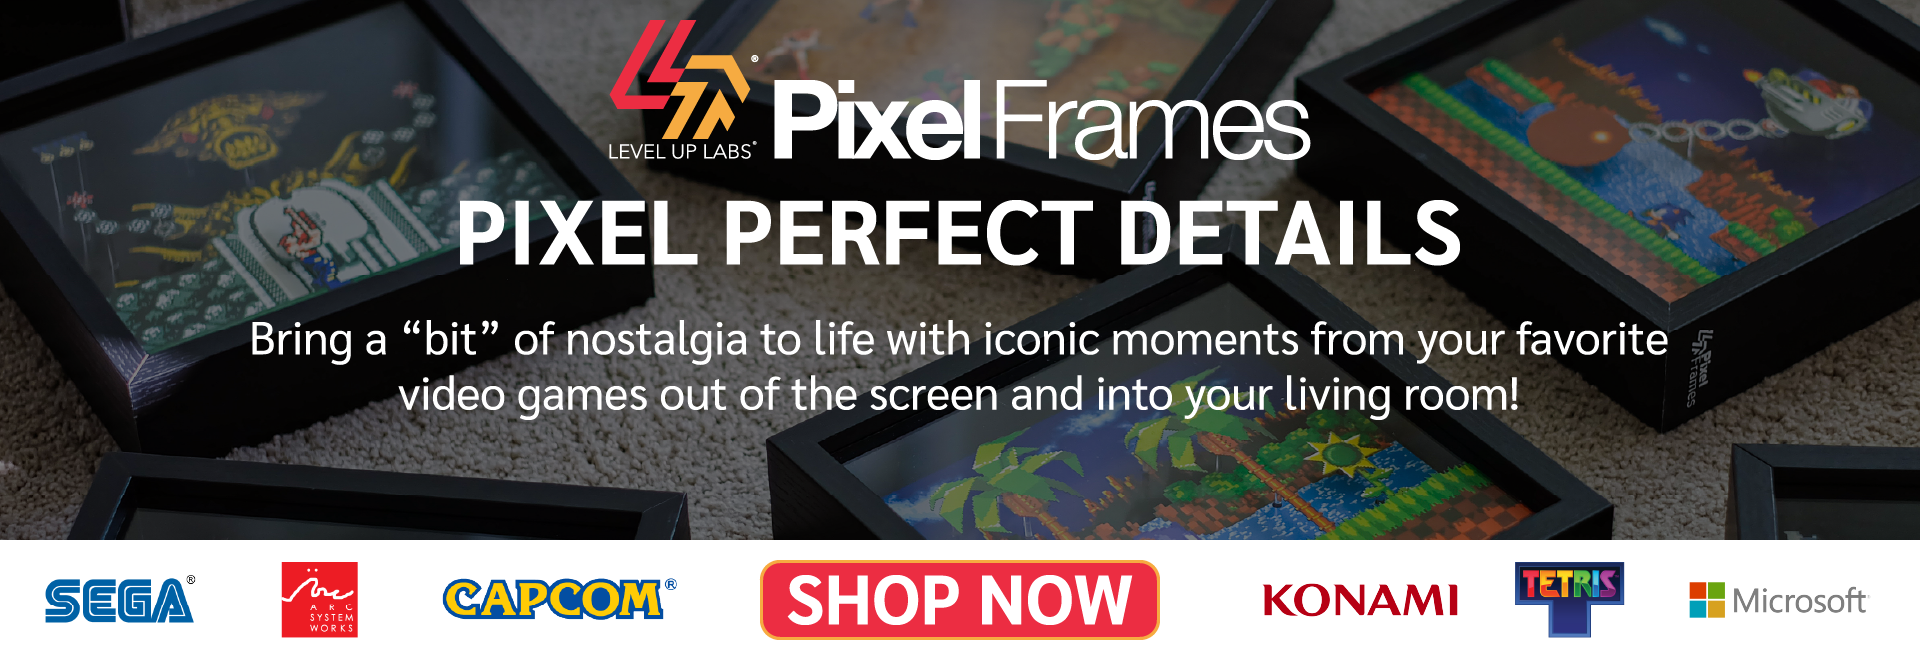 Pixel Frames - Pixel Perfect Details